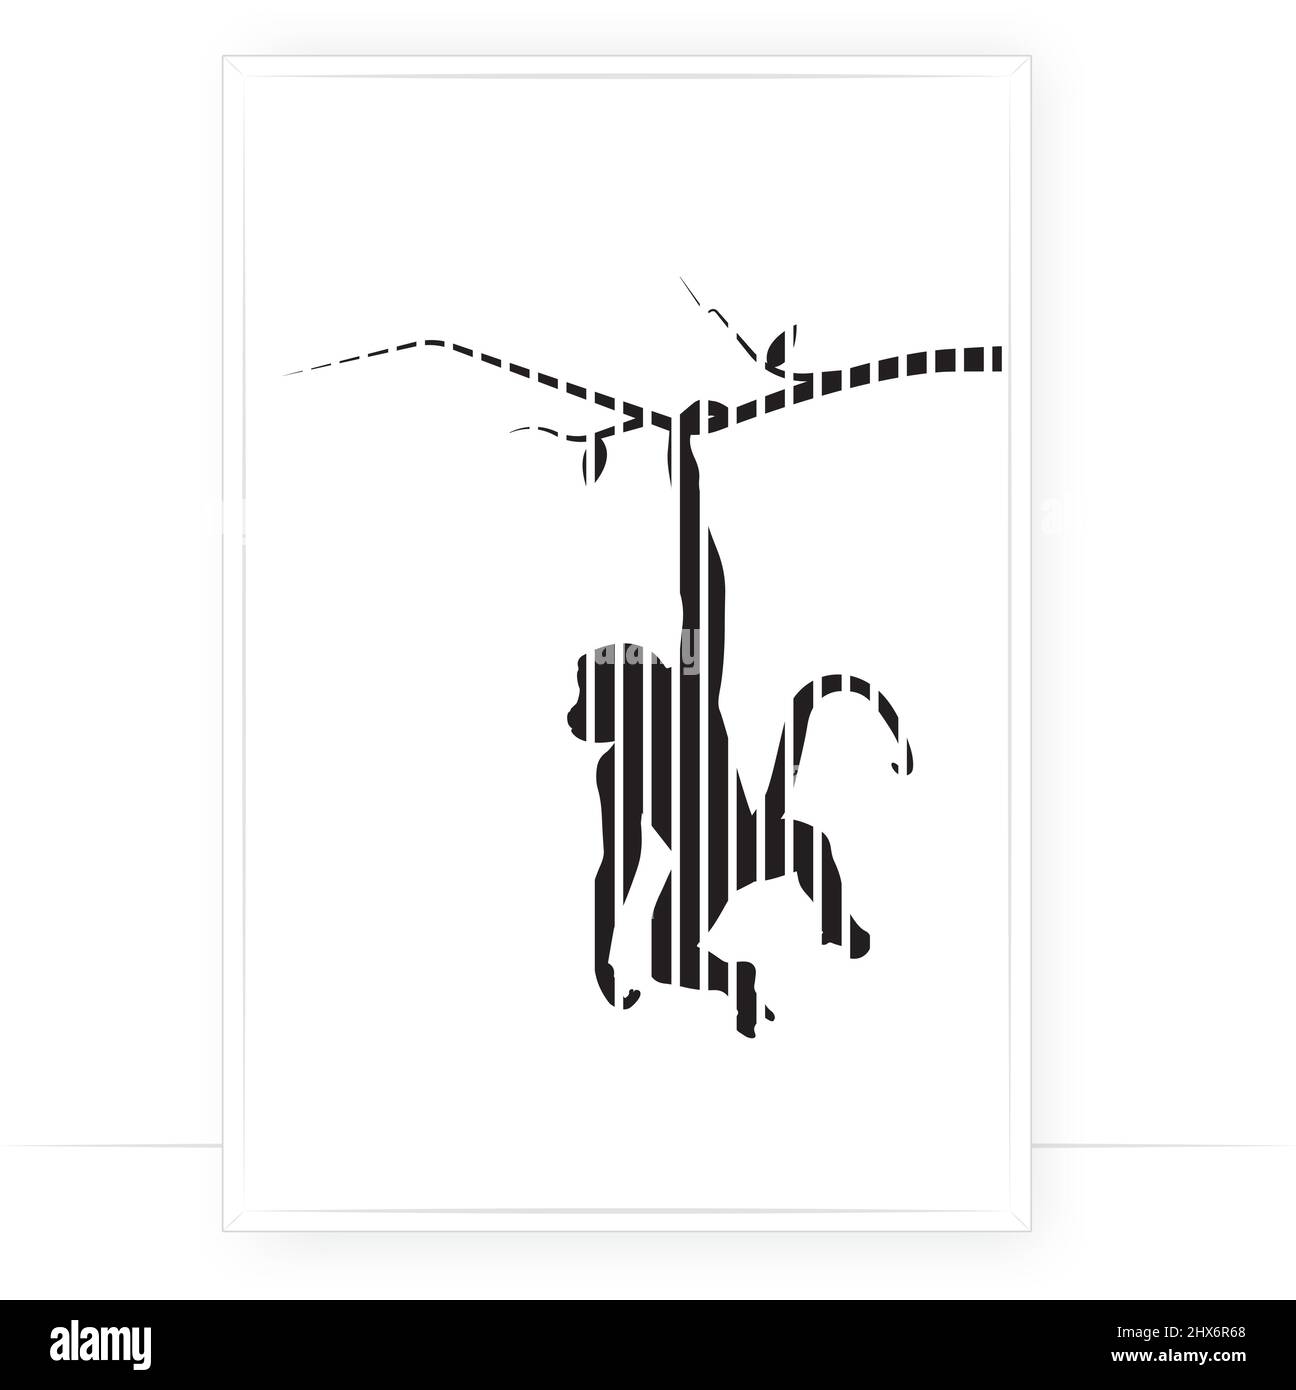 Weiße Tiger Silhouette, Kunstdesign. Weiße Tiger Illustration, Poster Design. Wandbilder, Kunstwerke, Vektor Stock Vektor